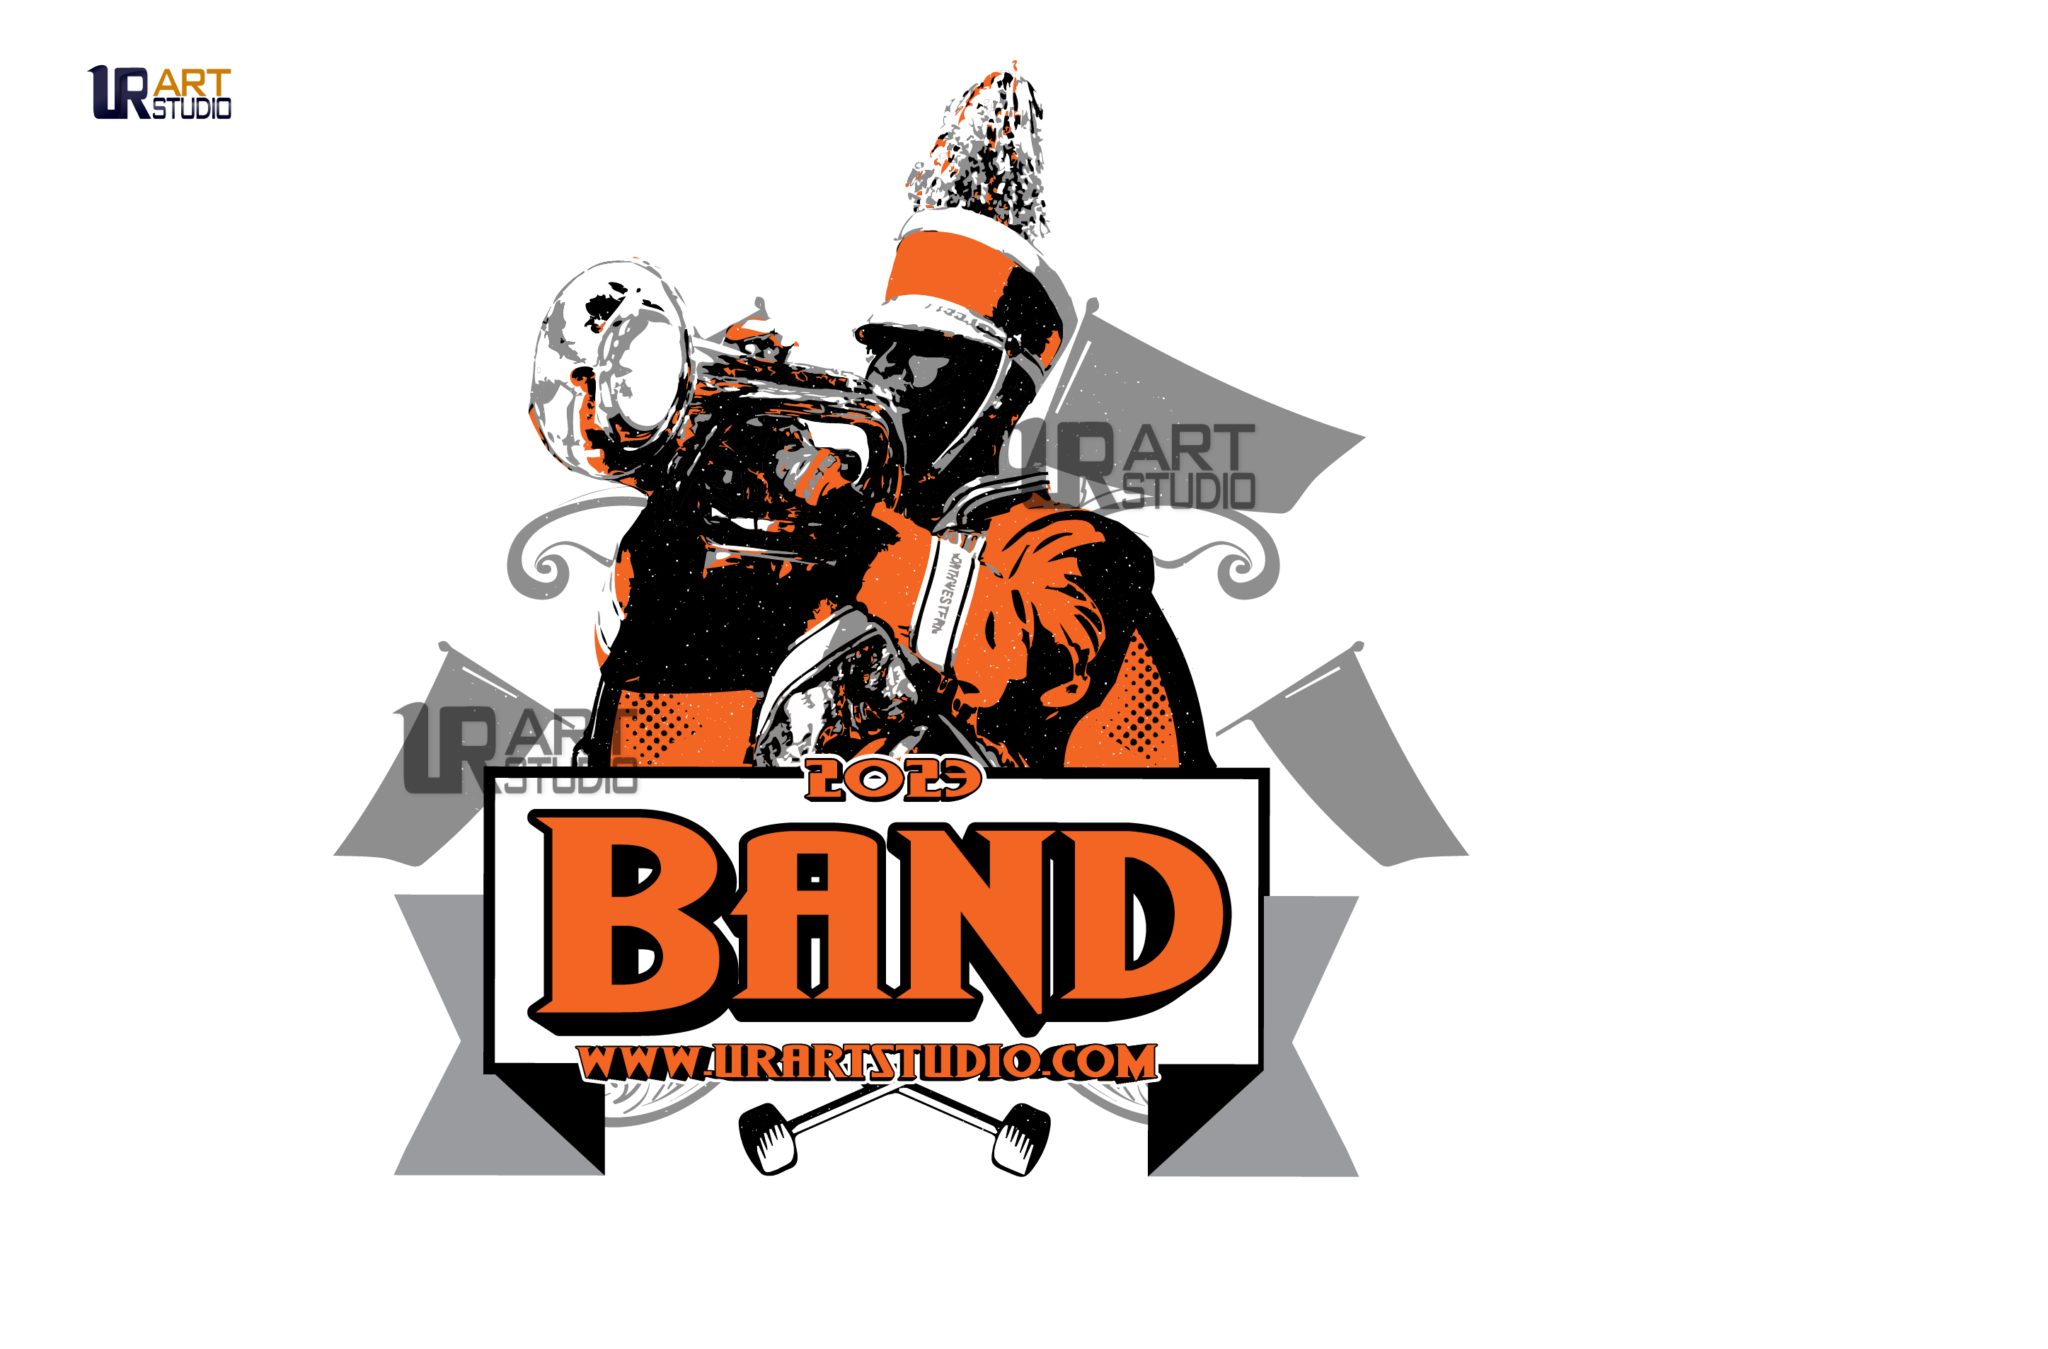 marching band logos